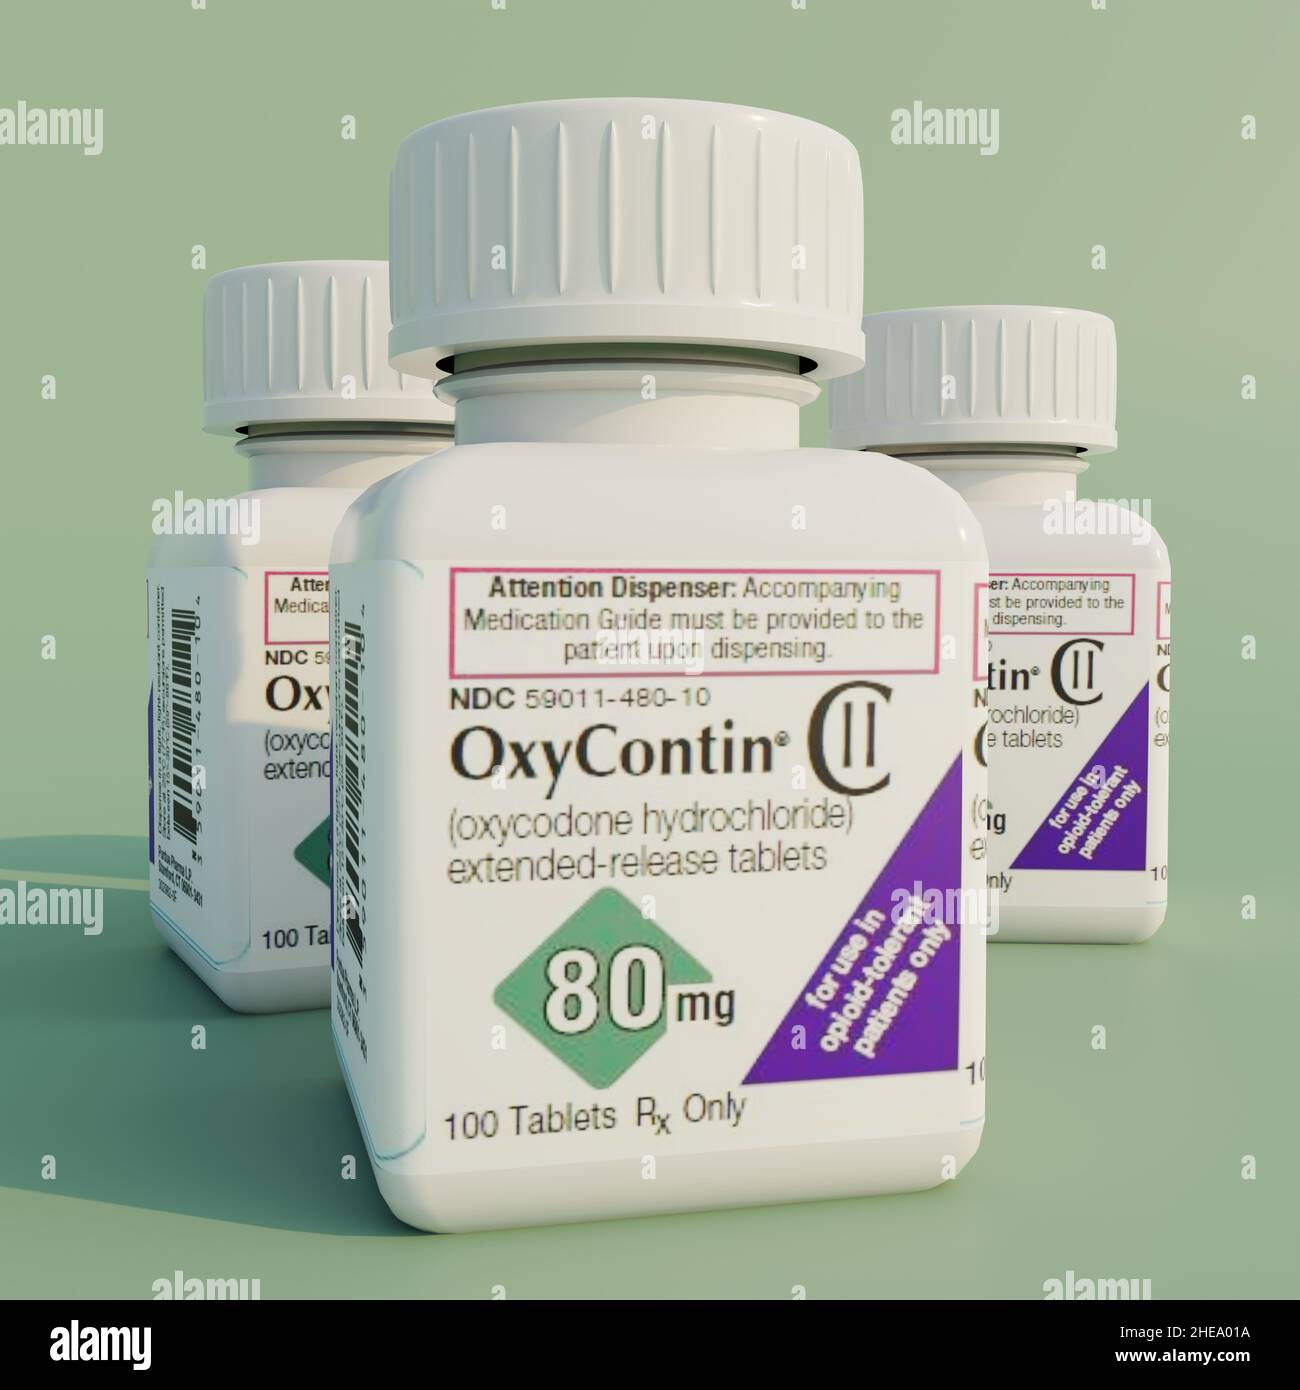 OxyContin bottles on flat surface. 3D rendering illustration. Stock Photo